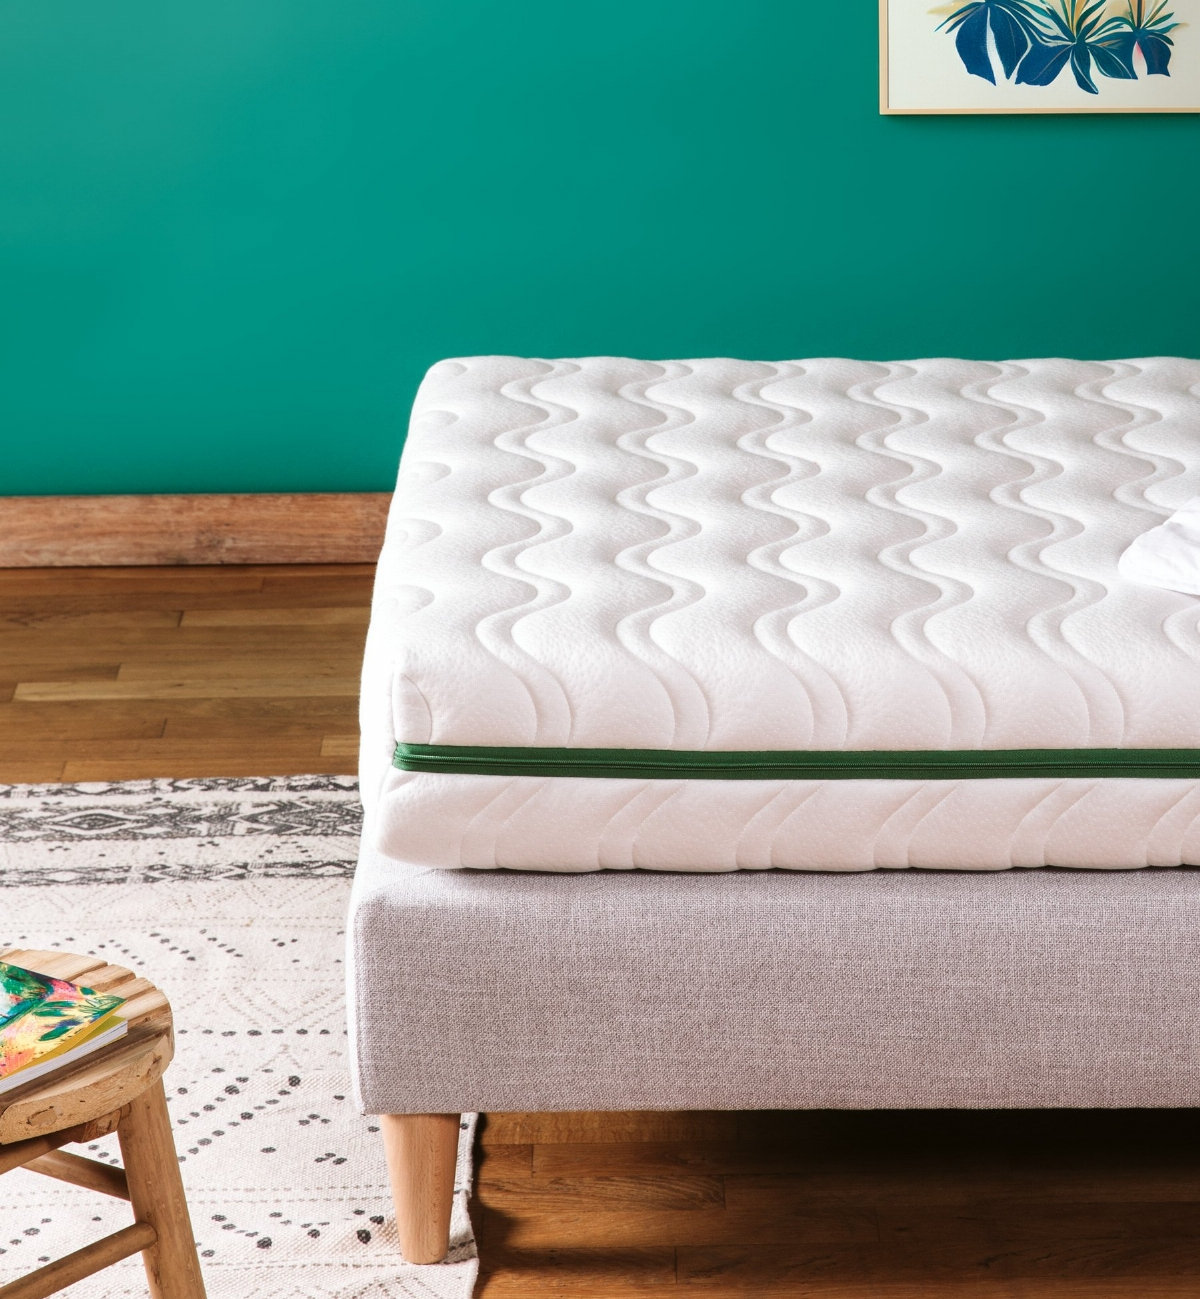 Funda de colchón integral Aloe R de fibras recicladas para cubrir un colchón individual o doble